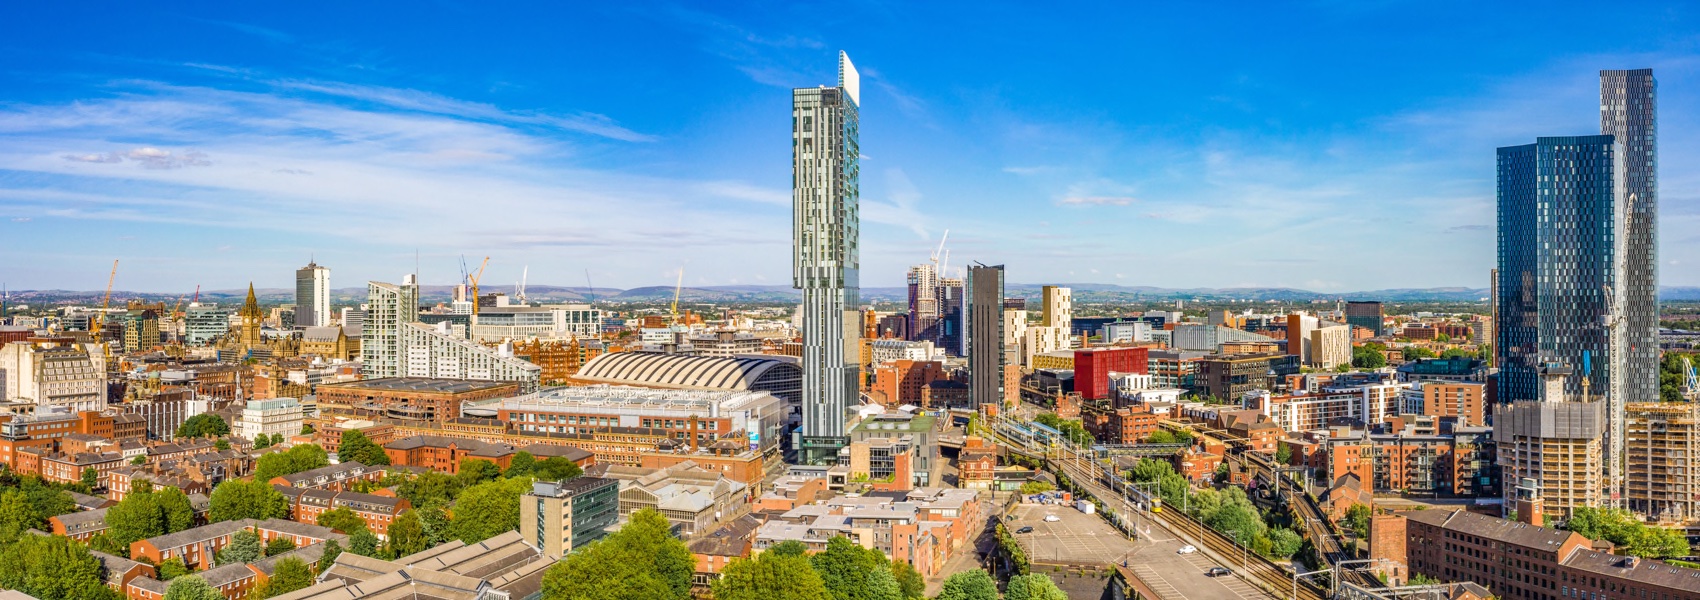 Panorama de Manchester